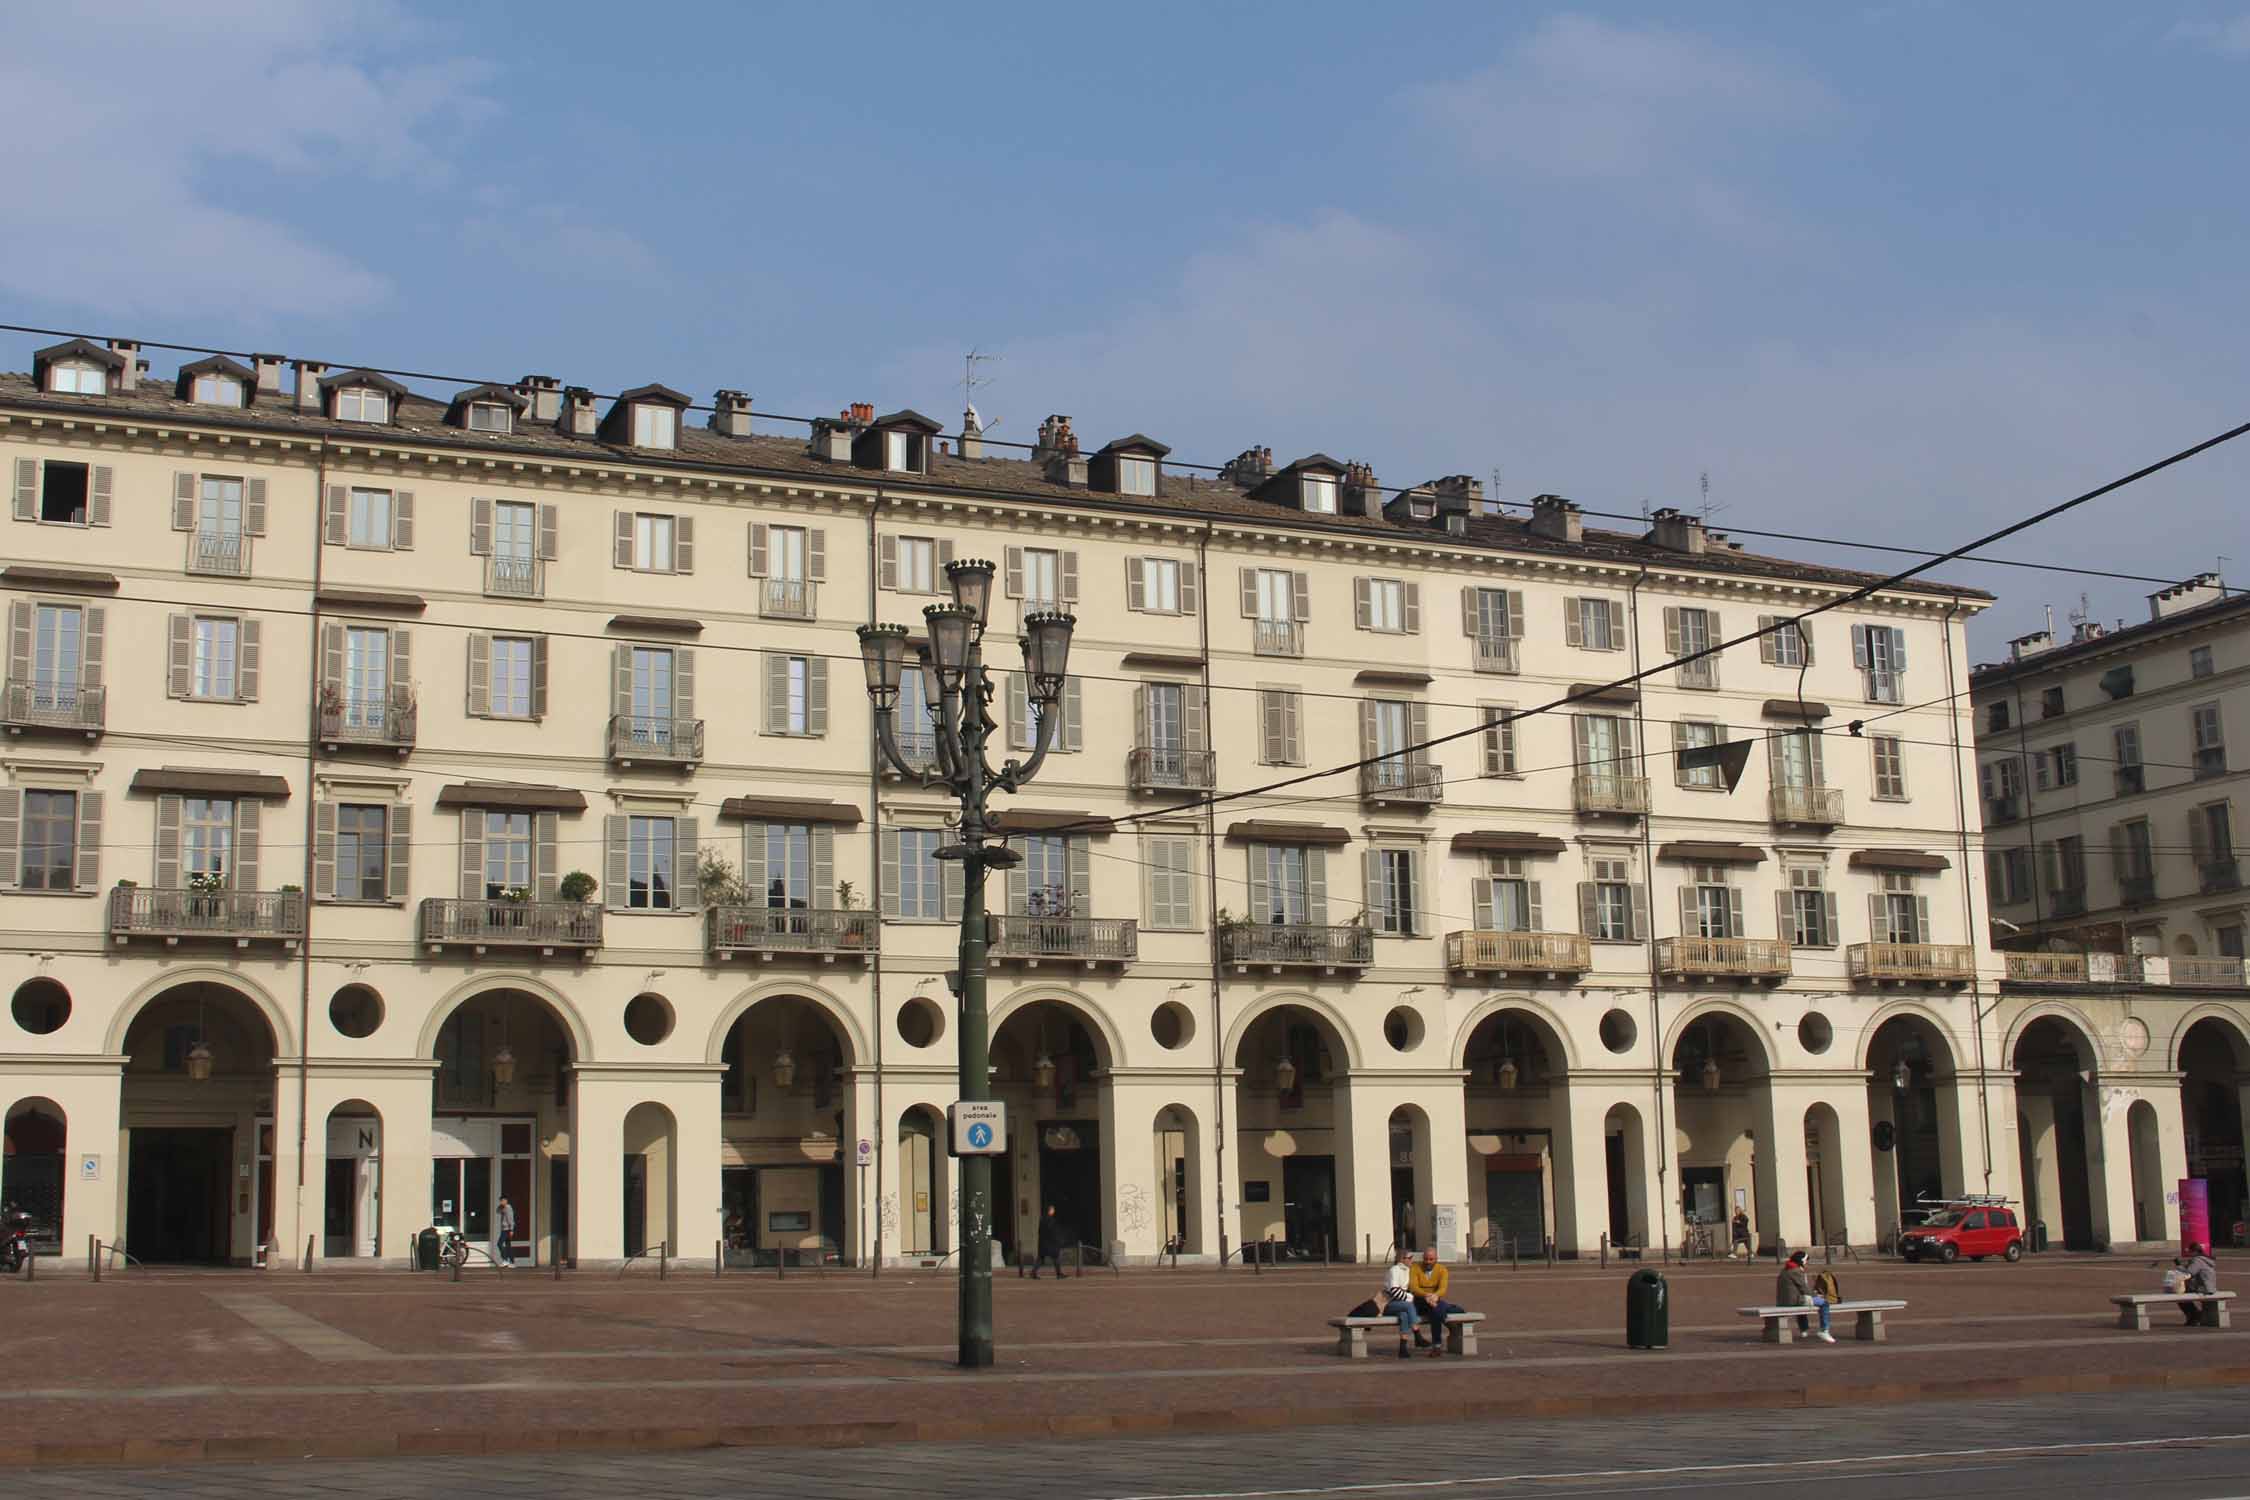 Turin, place Vittorio Veneto, arcade